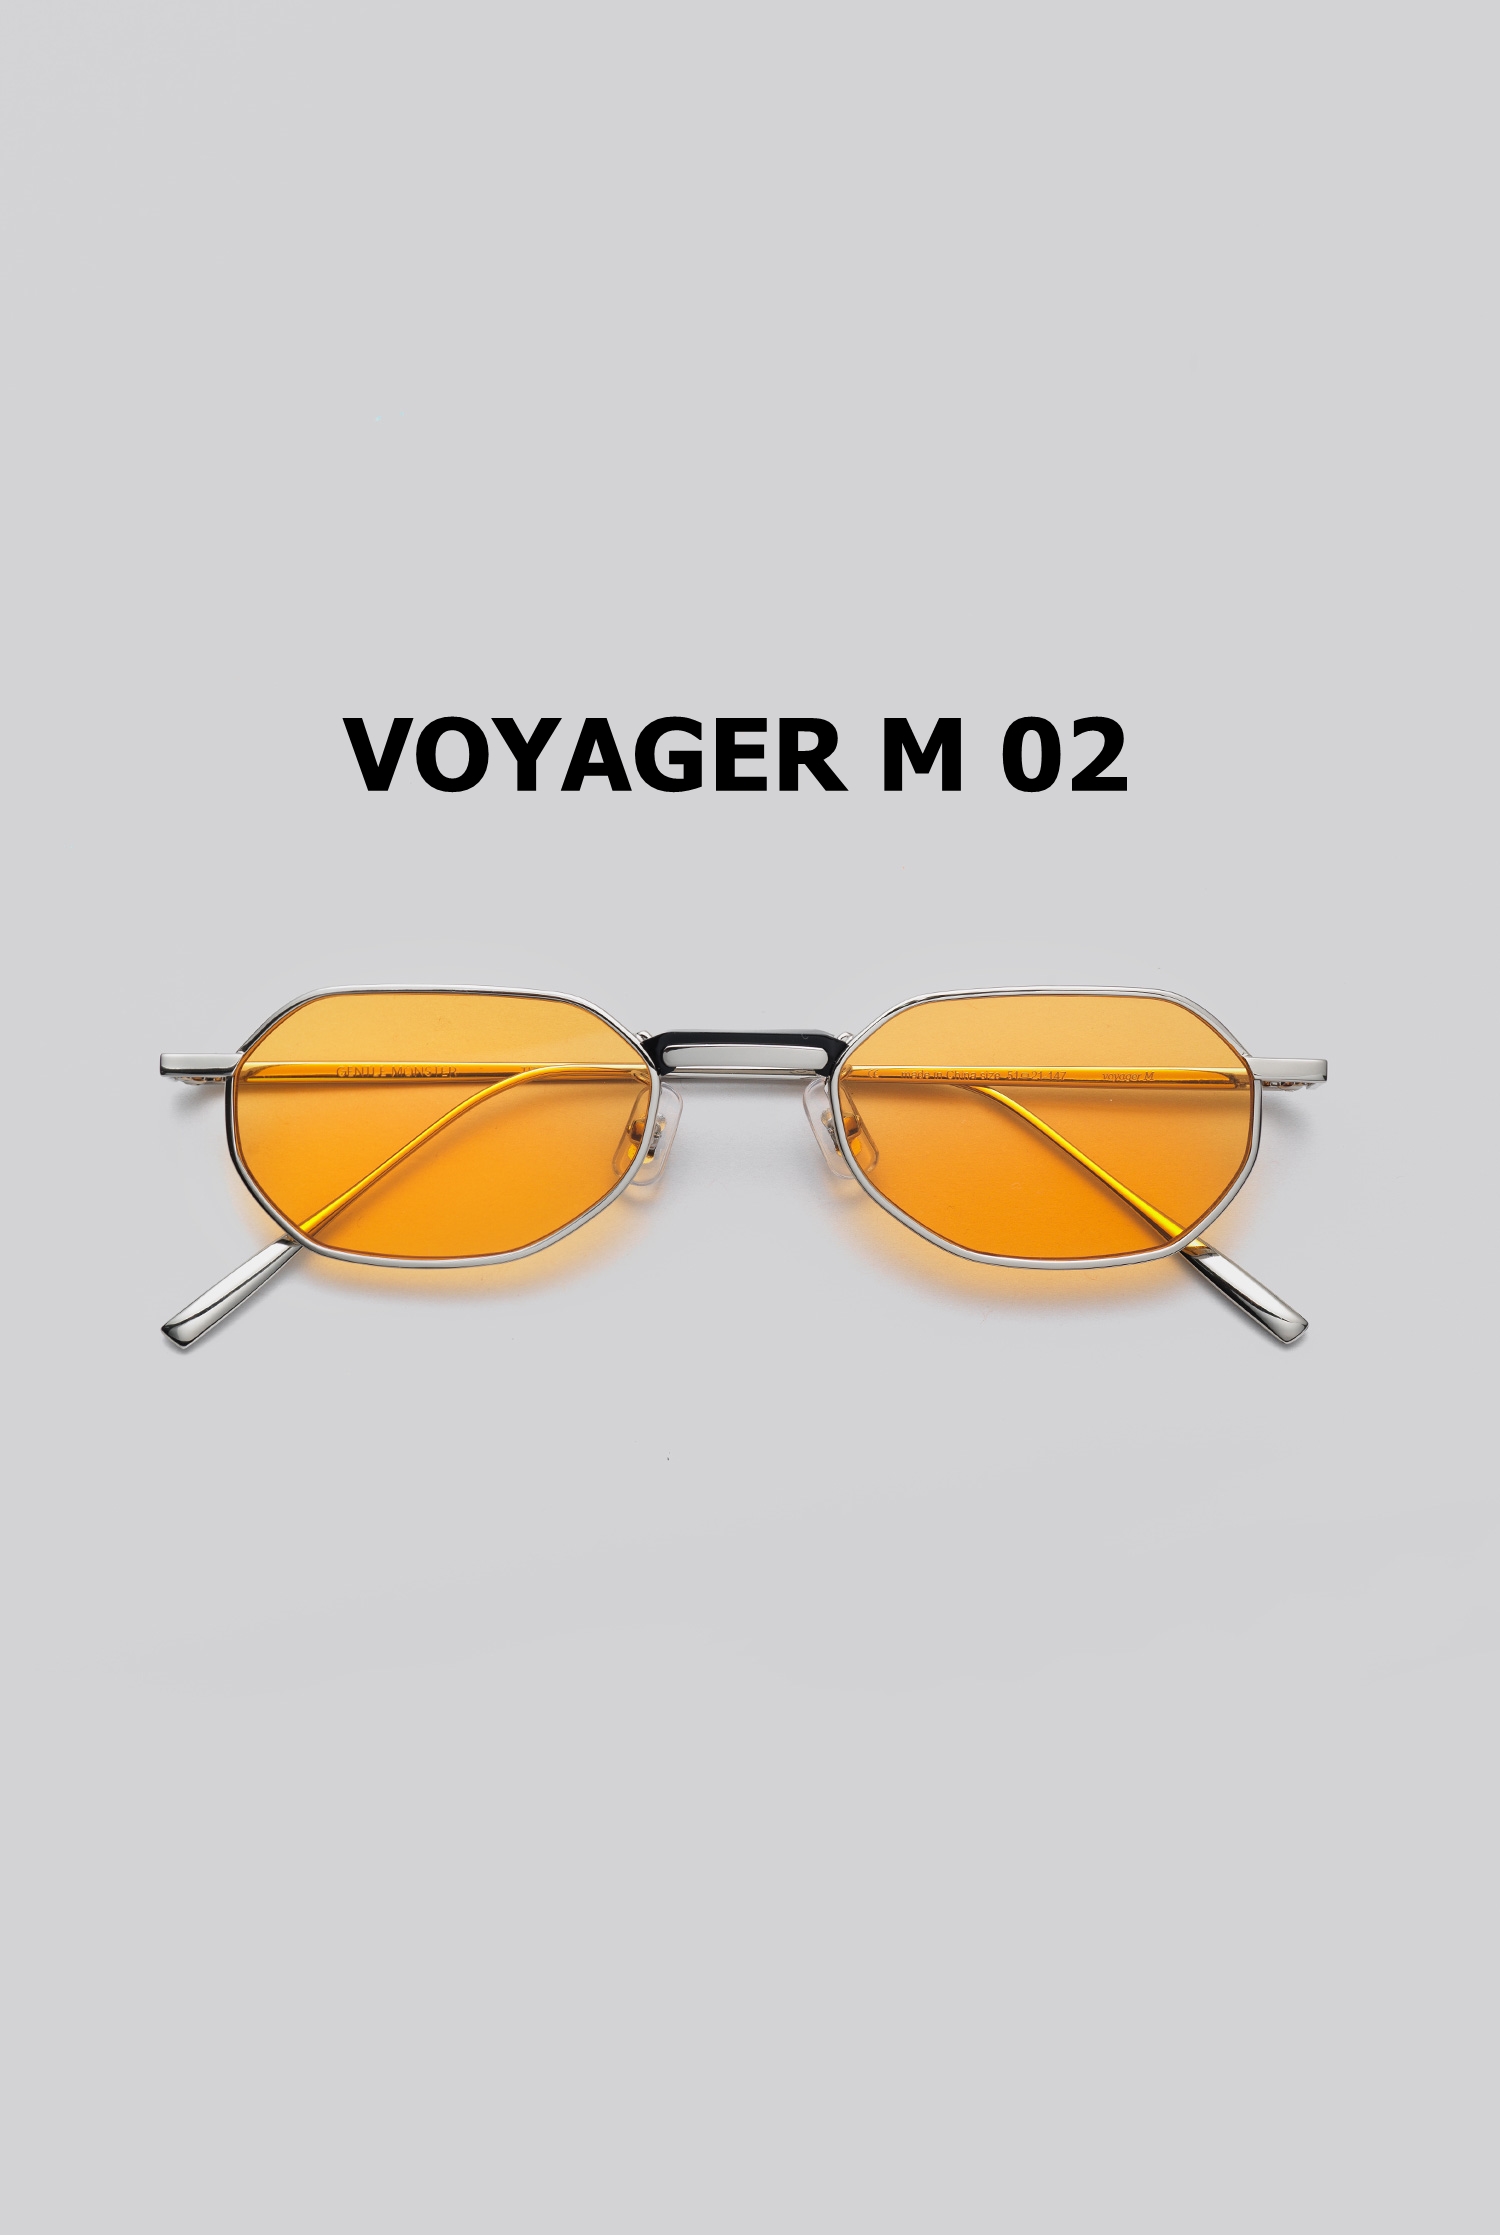 VOYAGER M 02